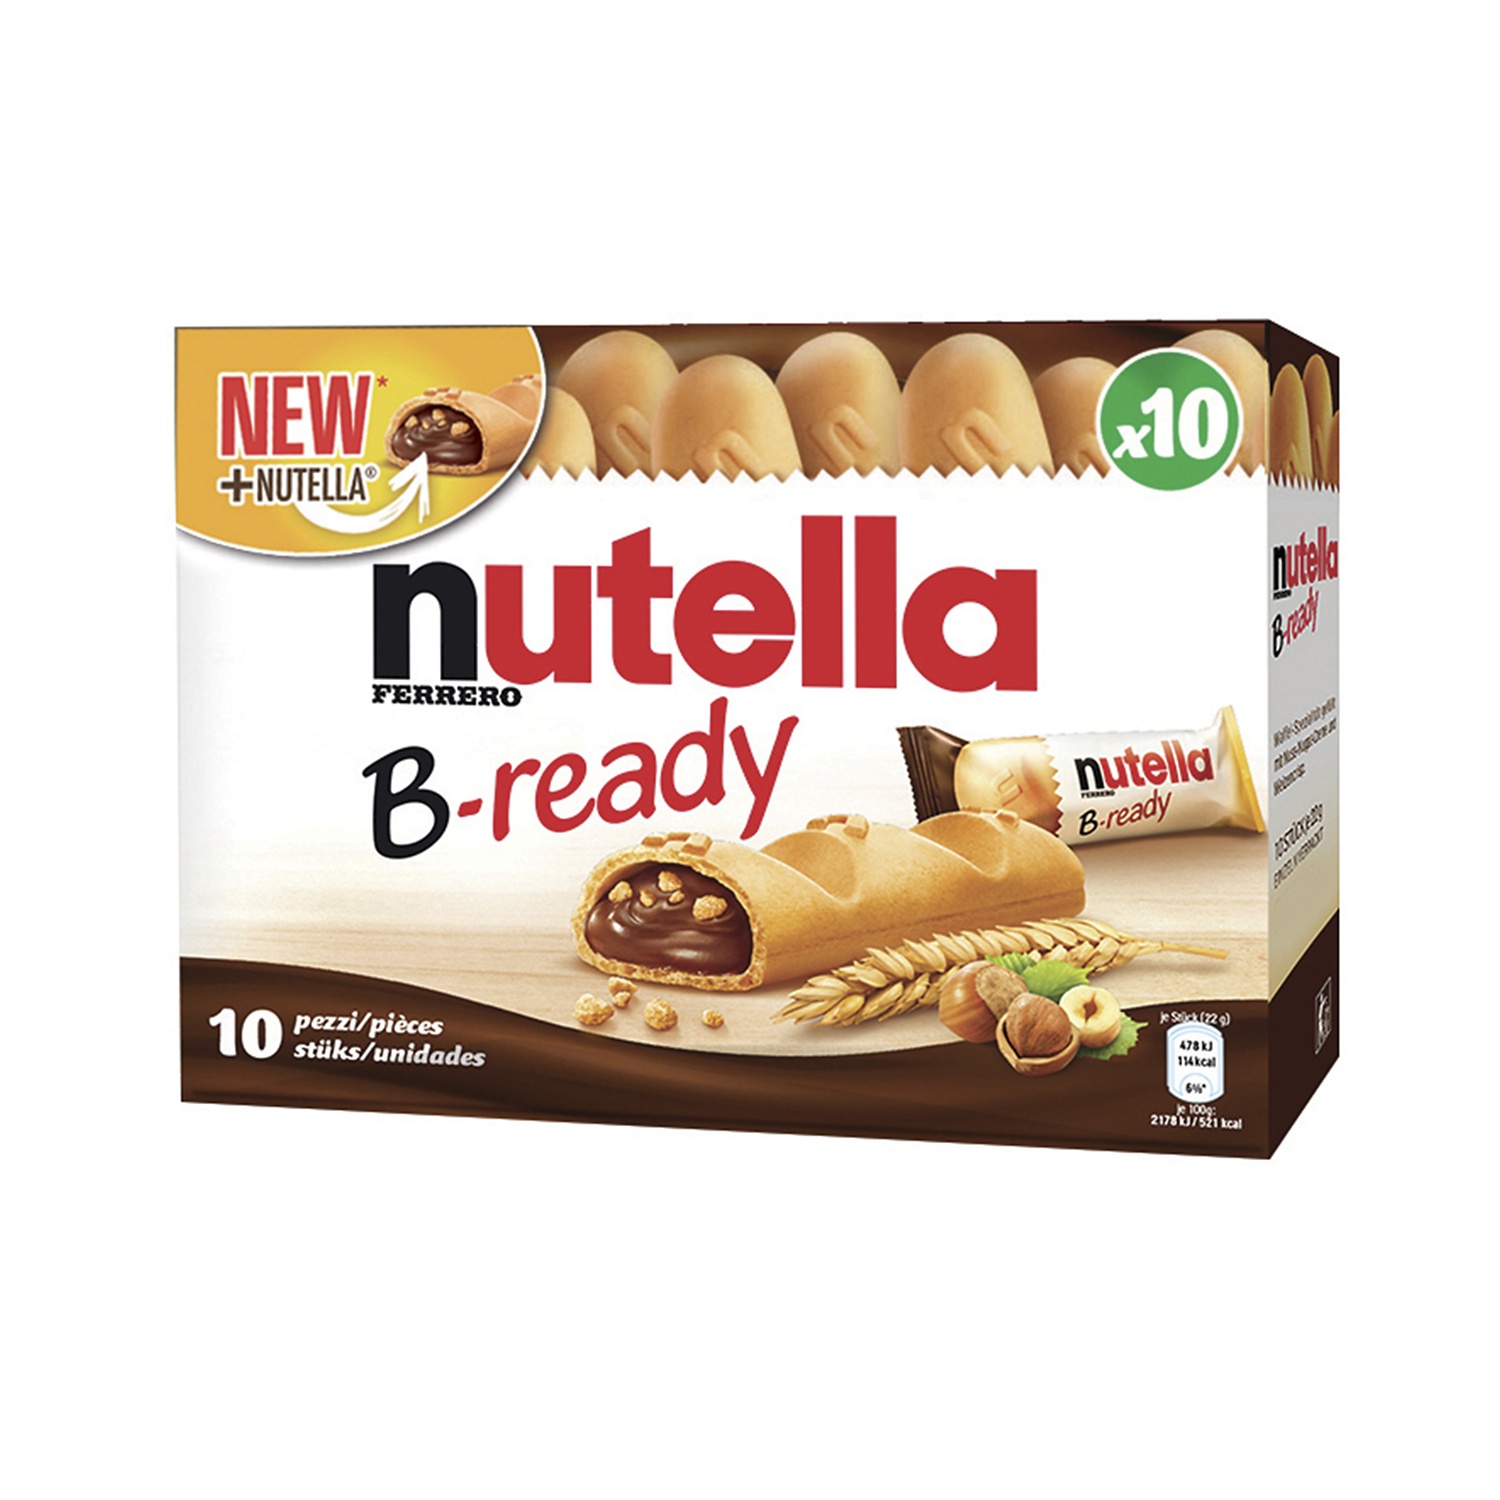 FERRERO Nutella B-Ready